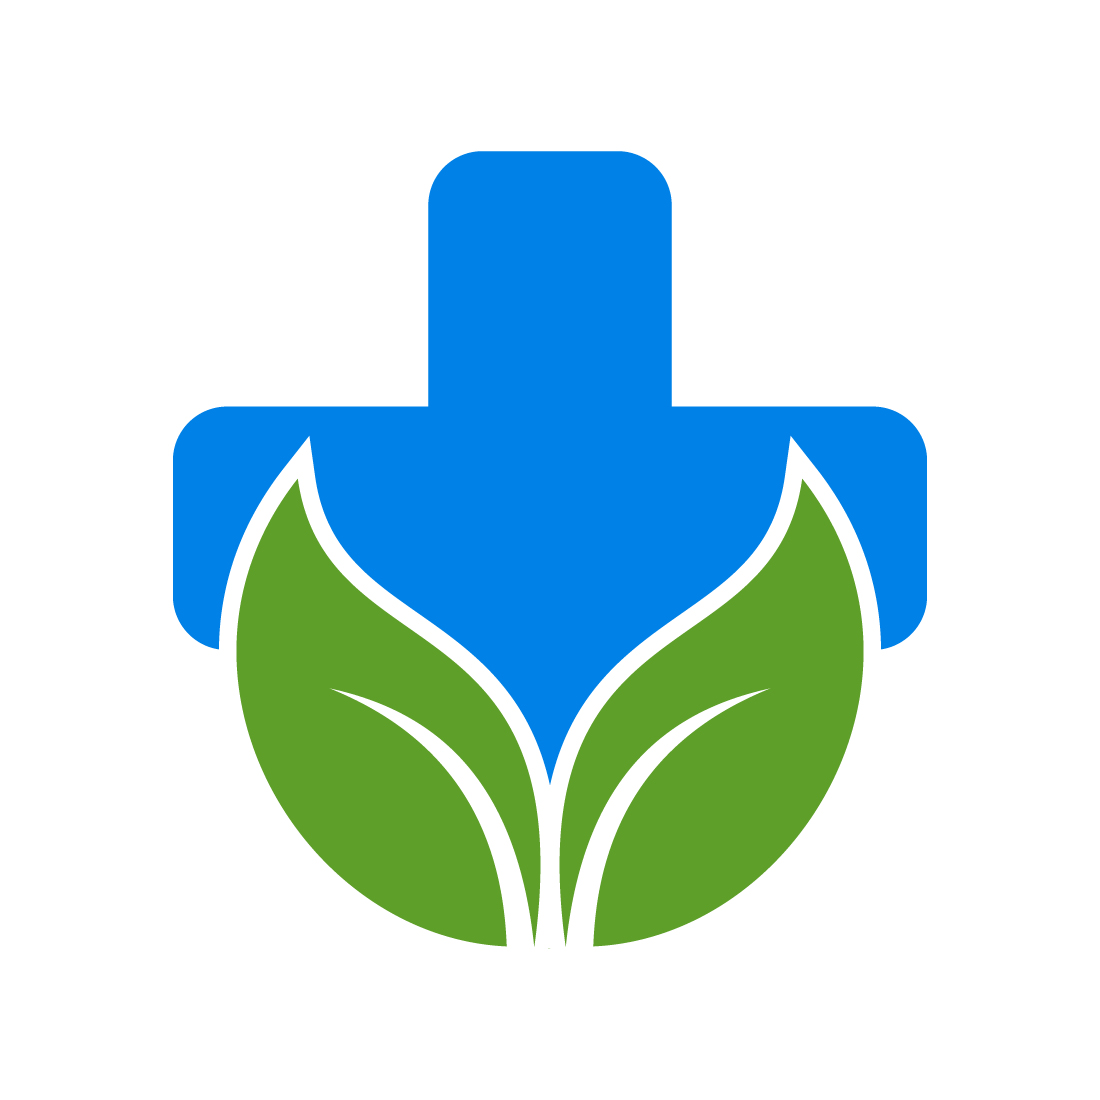 Biotechnology logo icon design Royalty Free Vector Image